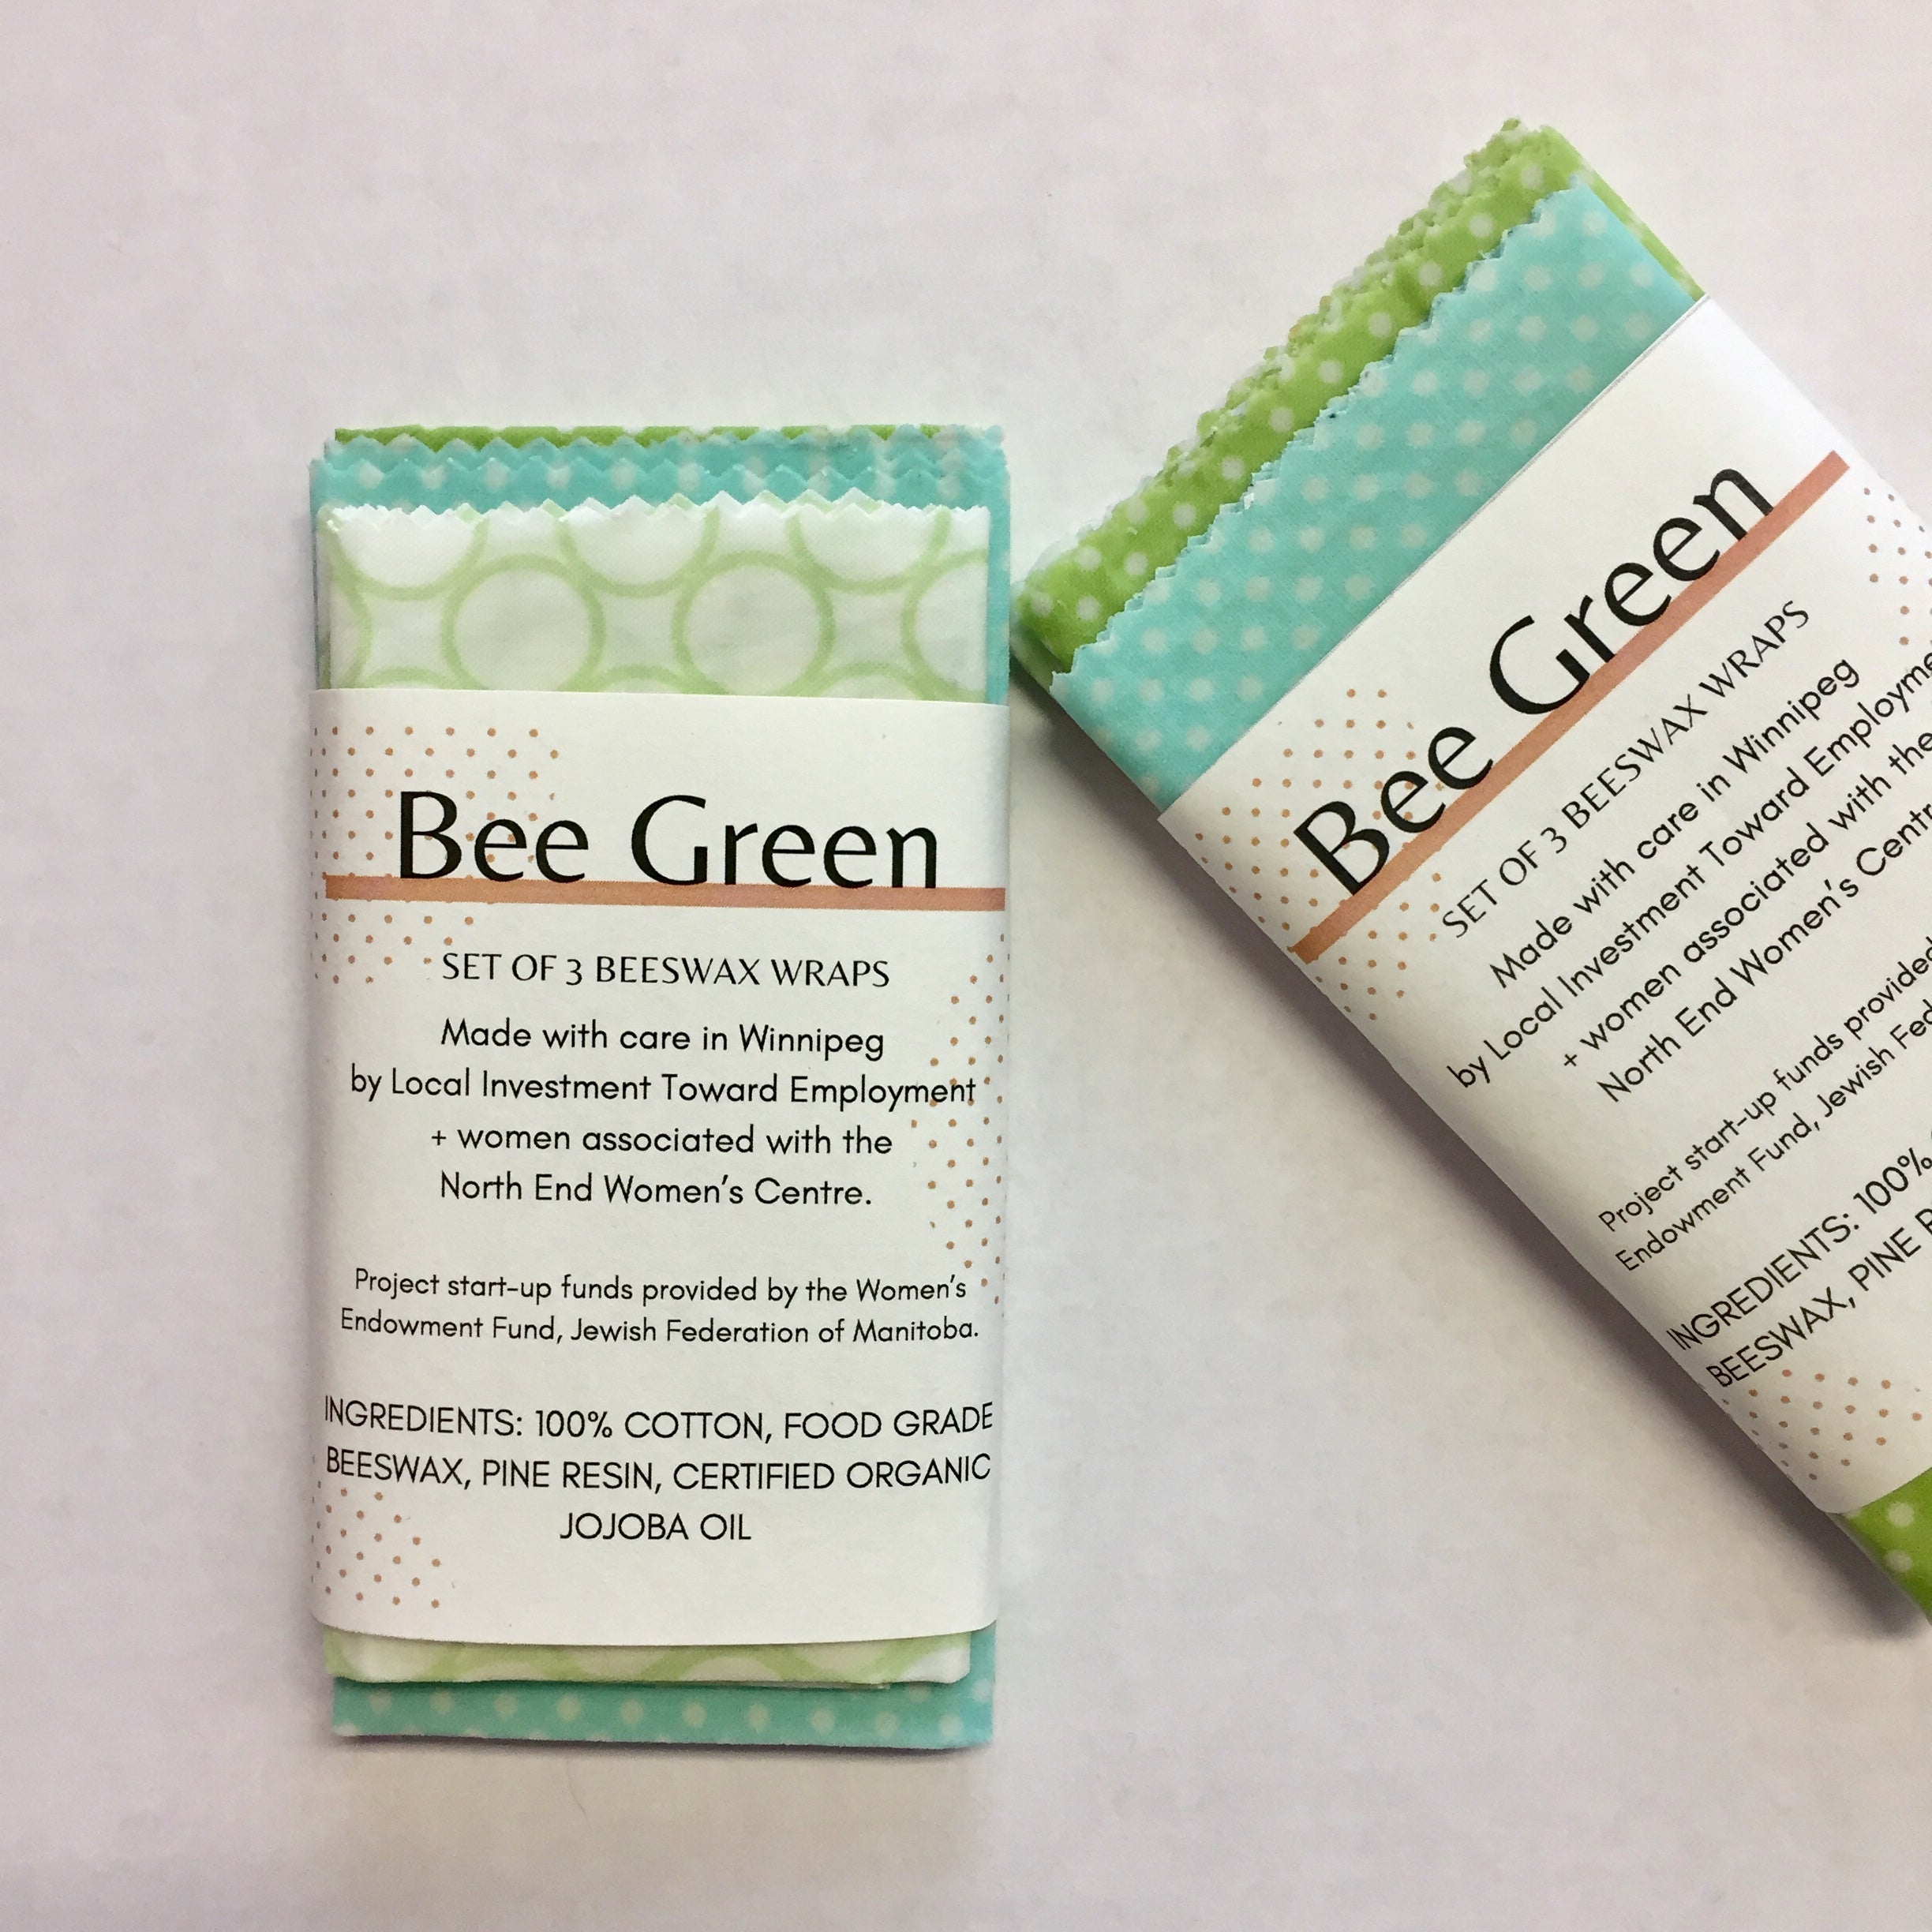 Bee Green Beeswax Wraps